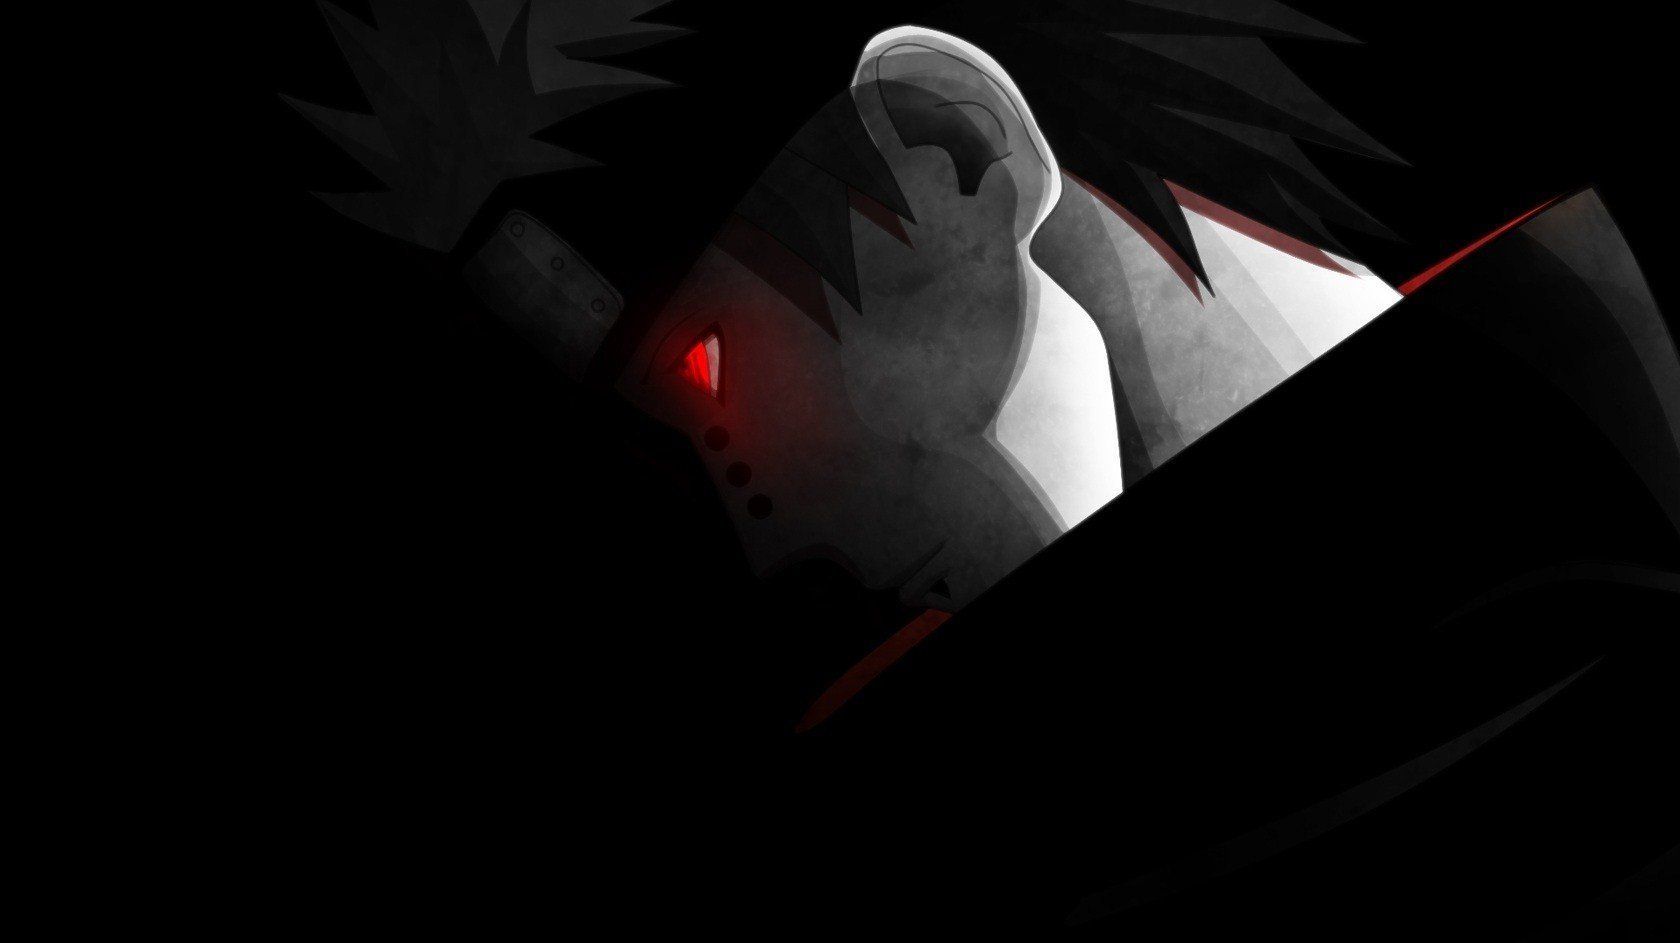 Anime Dark Boy Wallpapers Top Free Anime Dark Boy Backgrounds Wallpaperaccess 9027